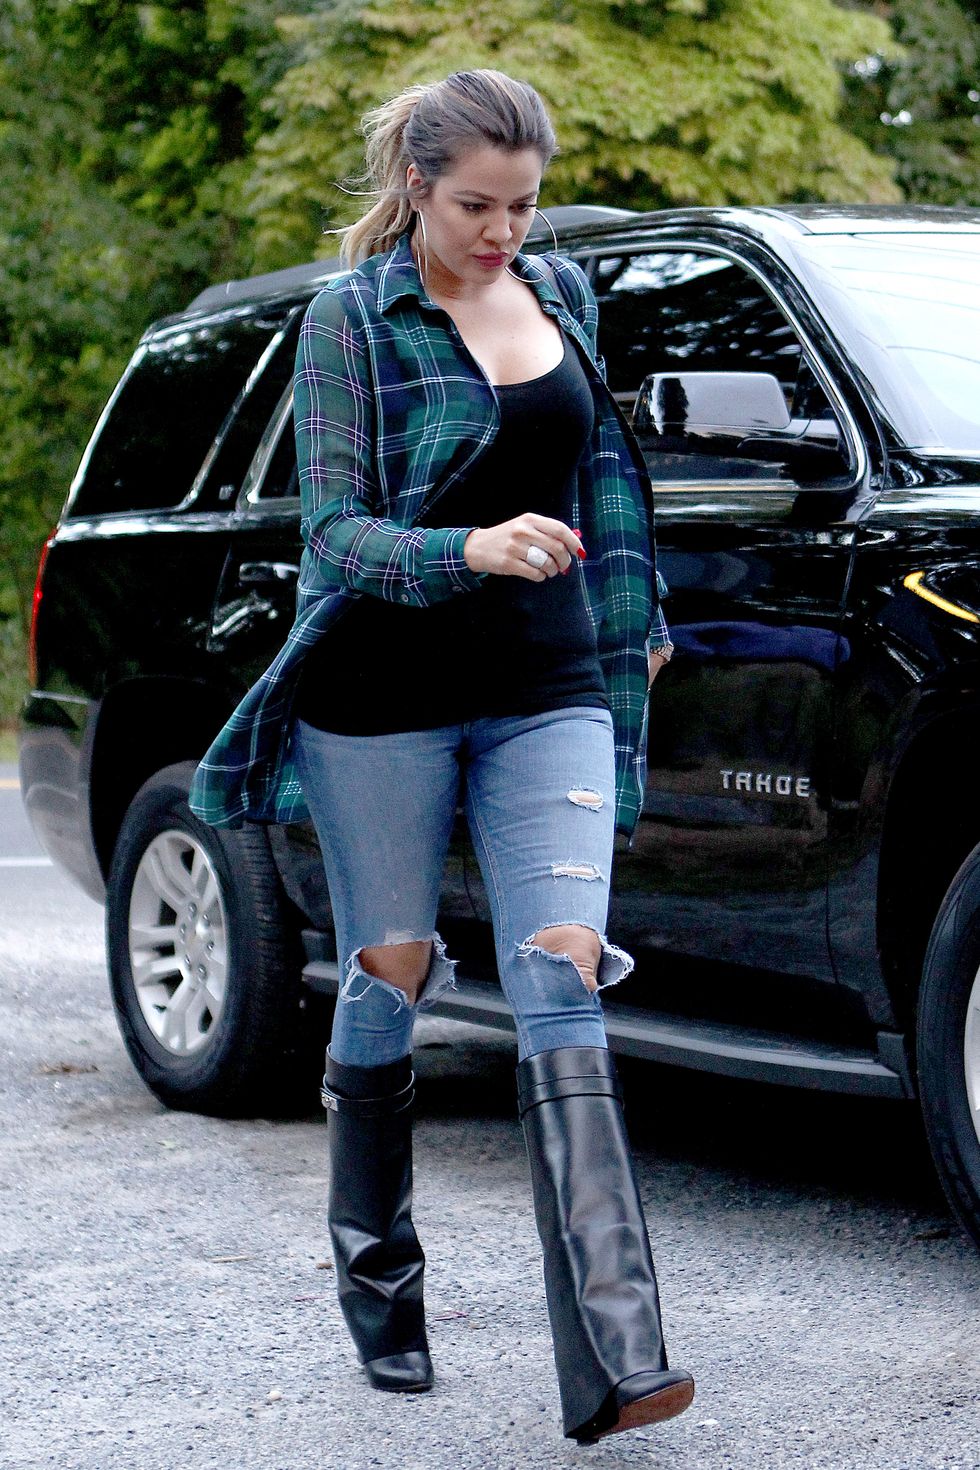 Khloe Kardashian wearing ripped jeans and check shirt - celebrity style photos - fashion - cosmopolitan.co.uk